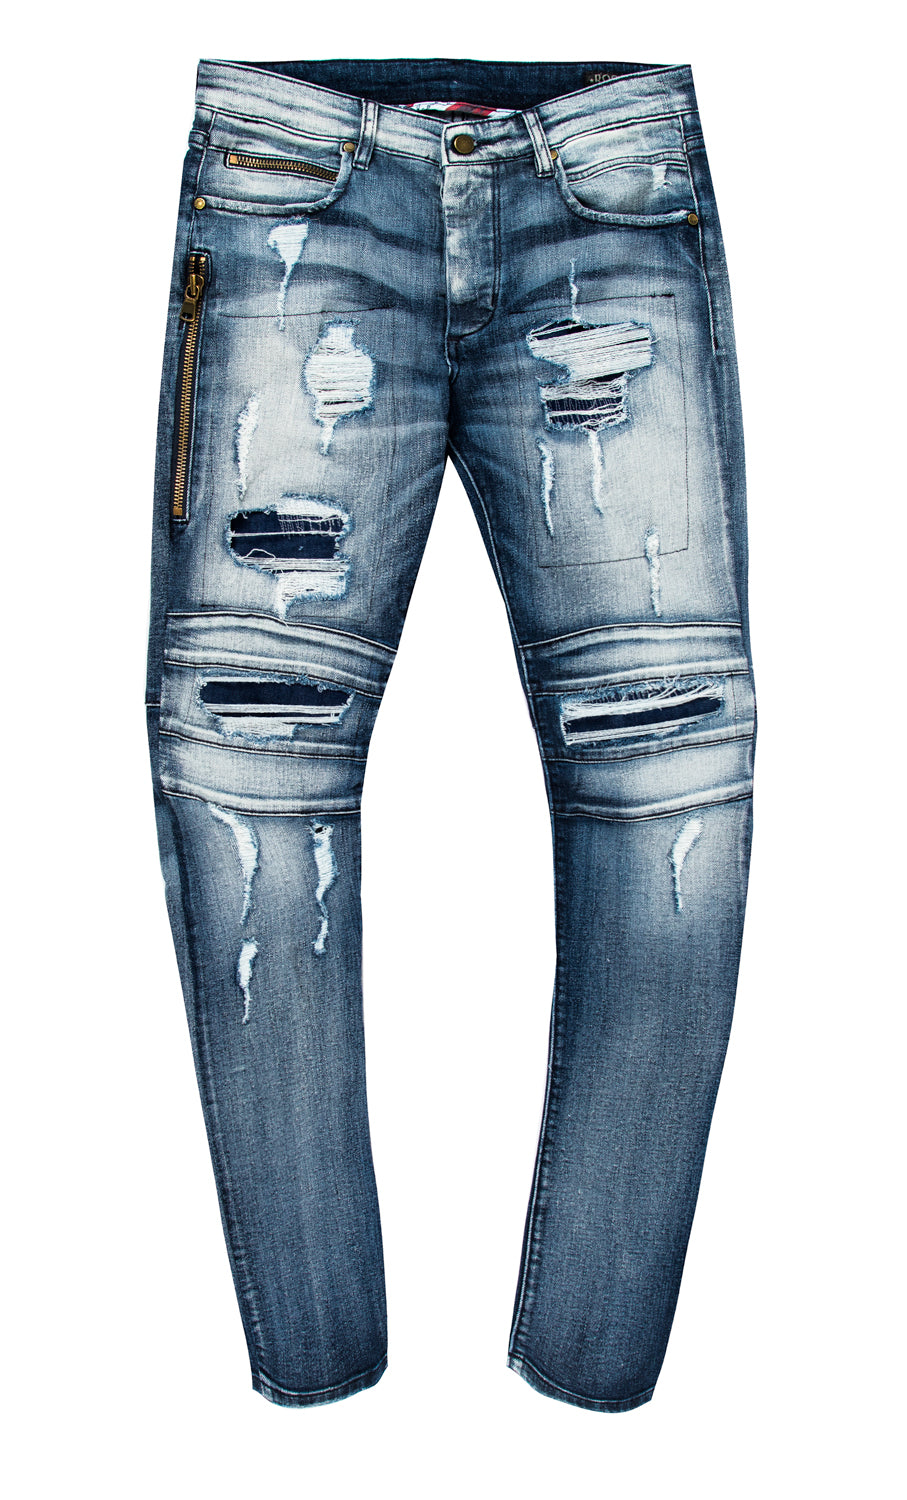 Mens Biker Jeans | Diego Denim Jeans | Rockstar Original